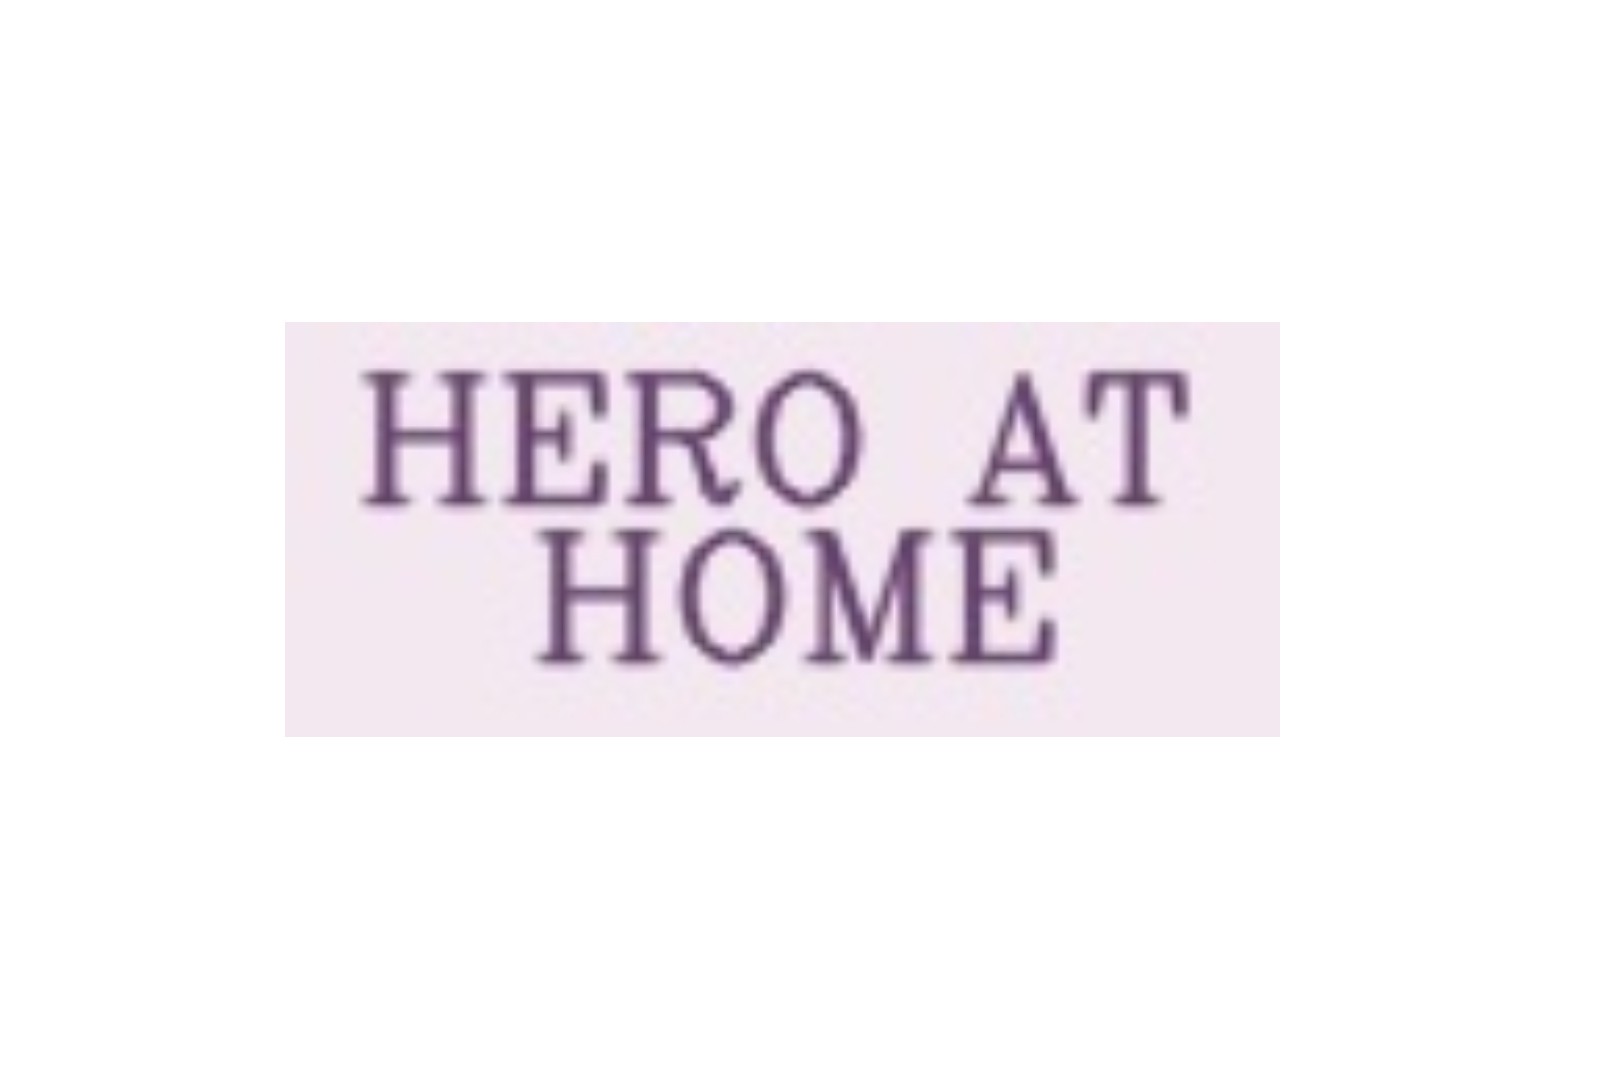 HERO AT HOME